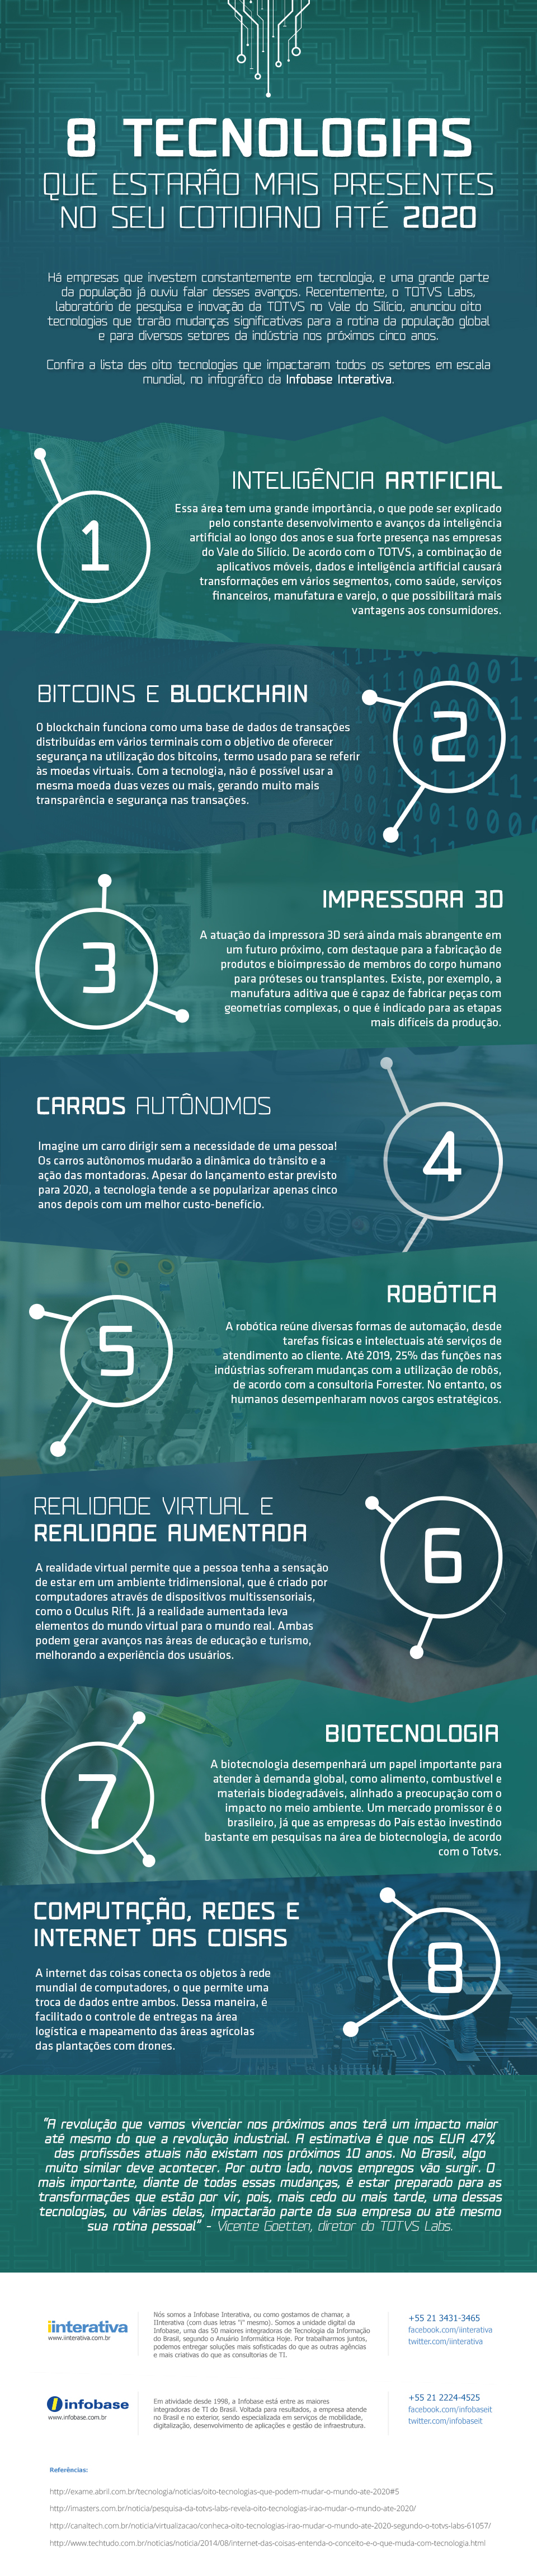 8-tecnologias